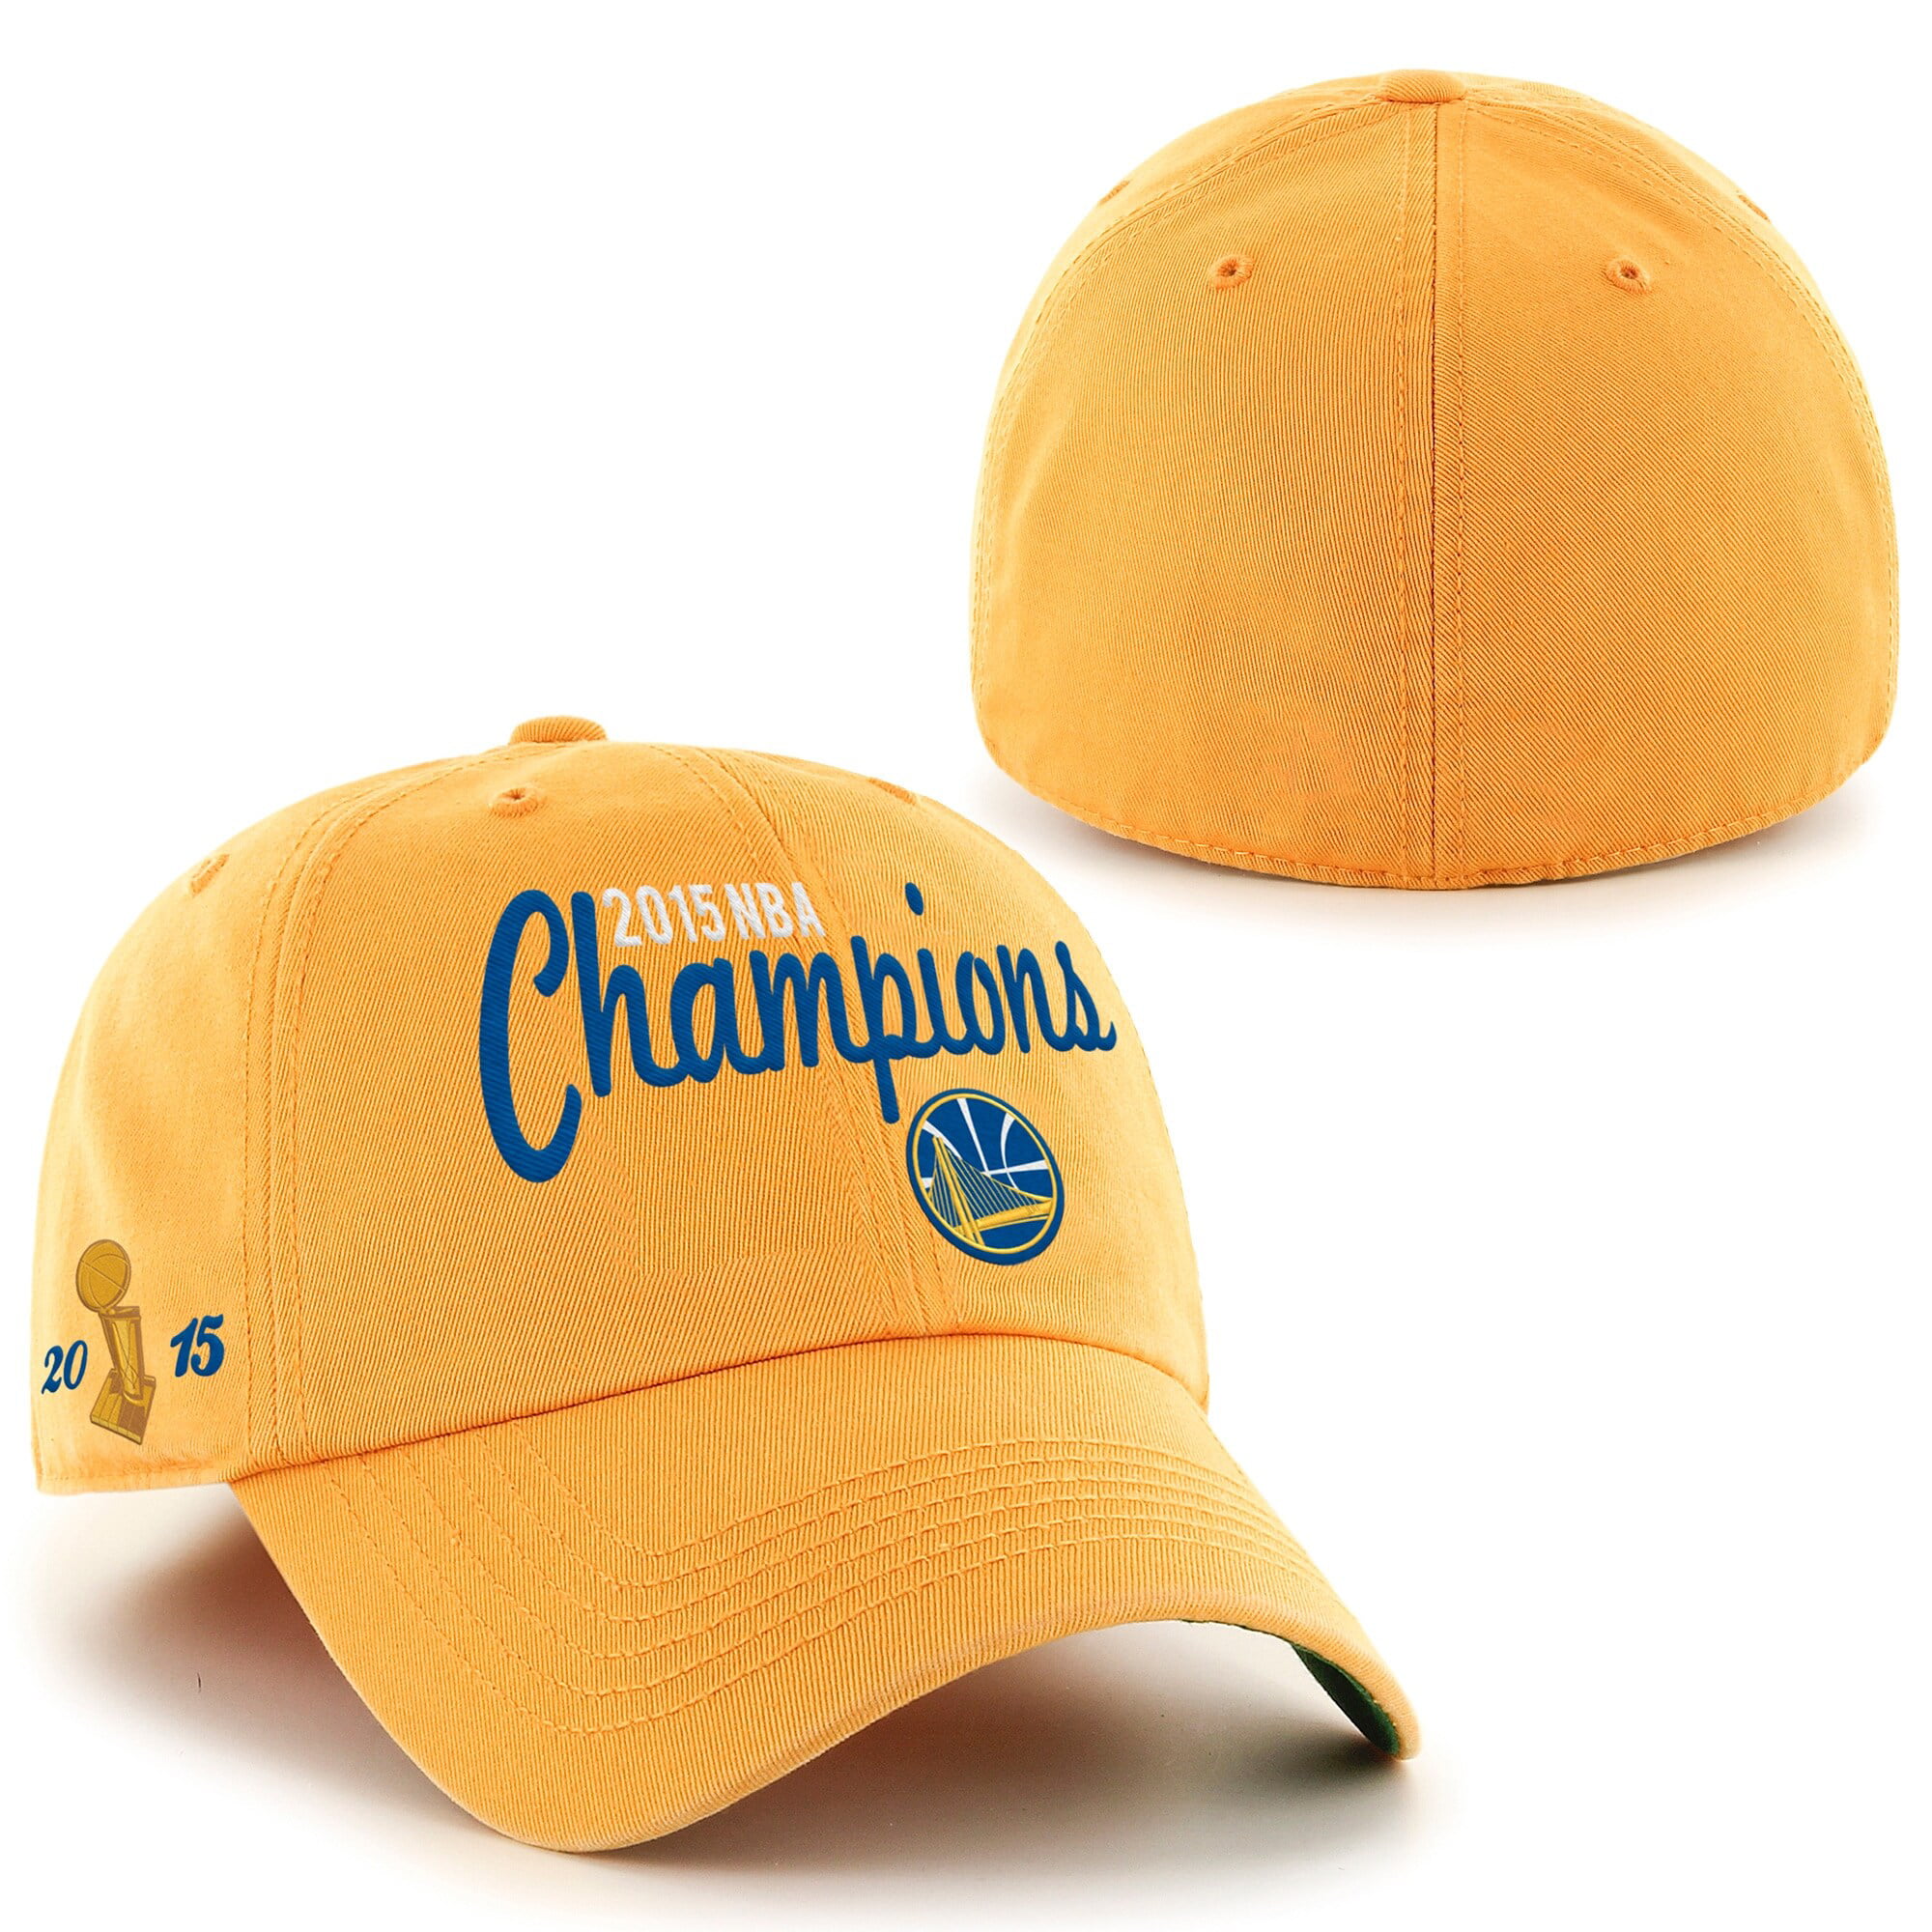 2015 warriors championship hat